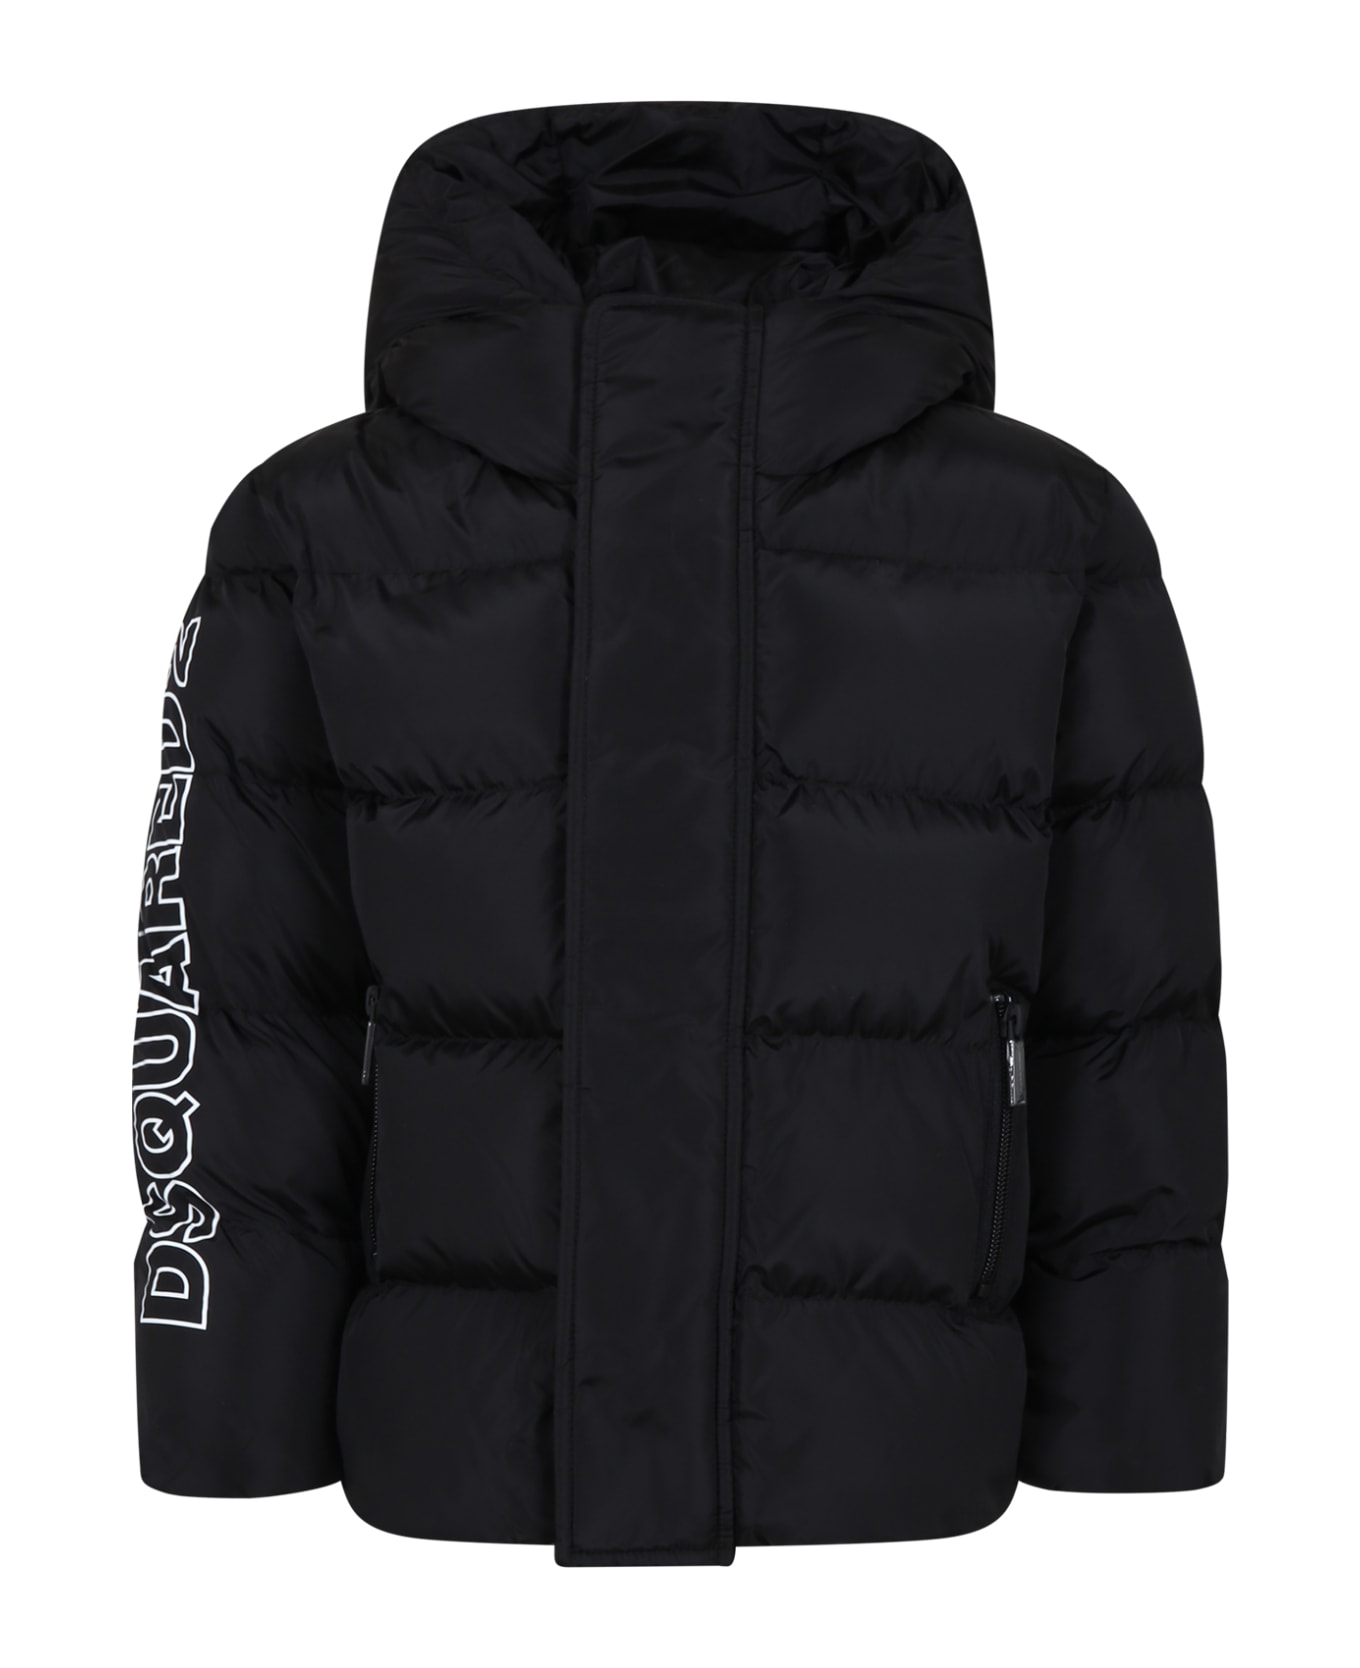 Dsquared2 Black Jacket For Boy With Logo - Nero